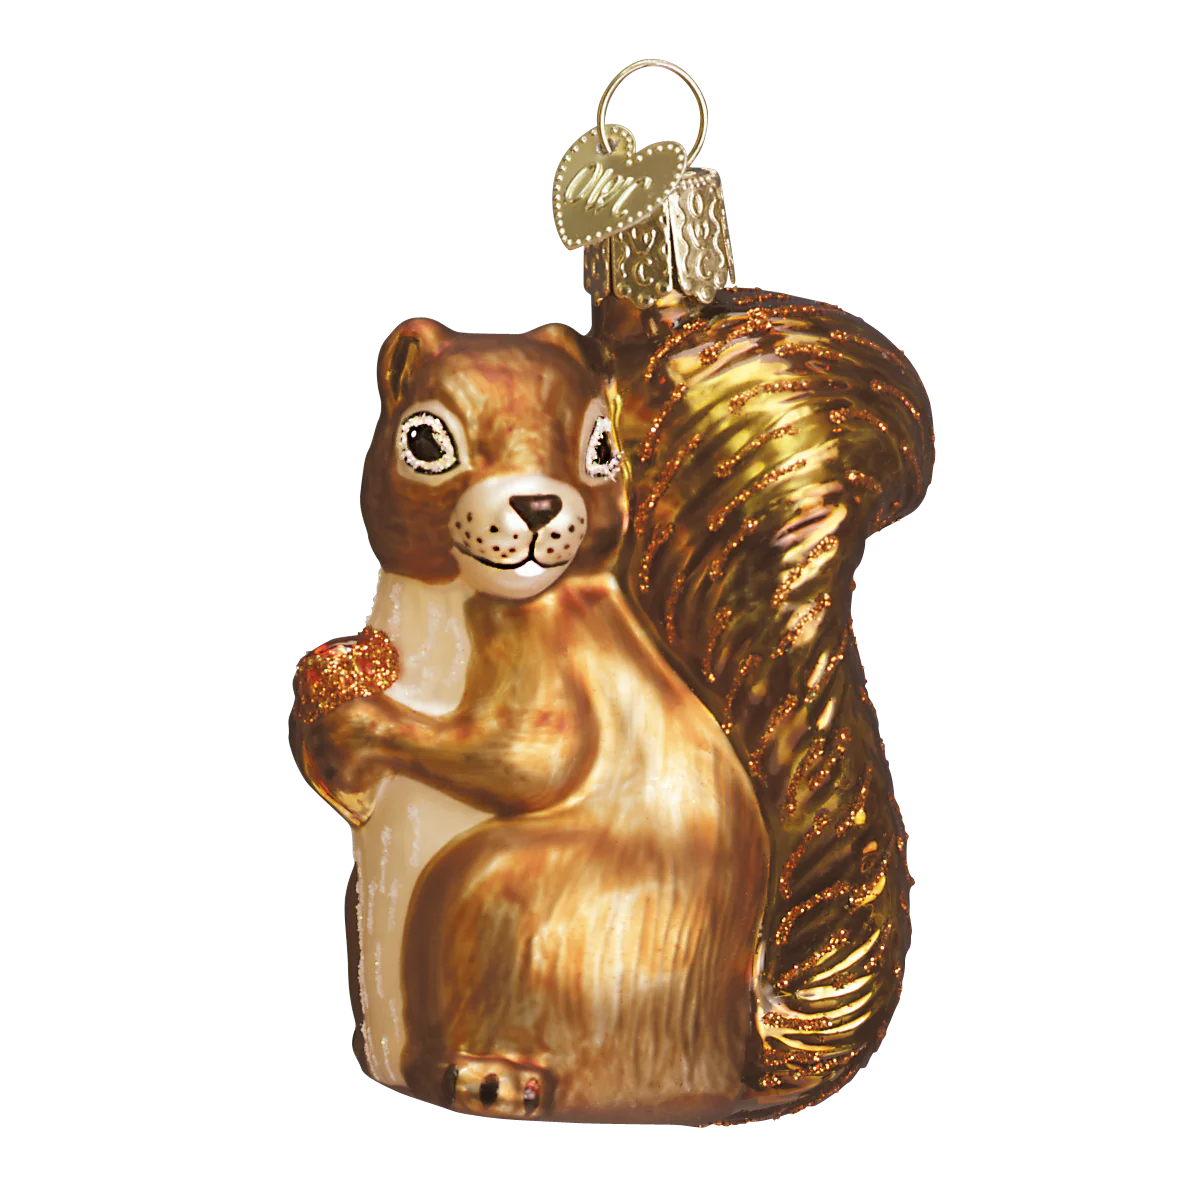 Ornament, Squirrel